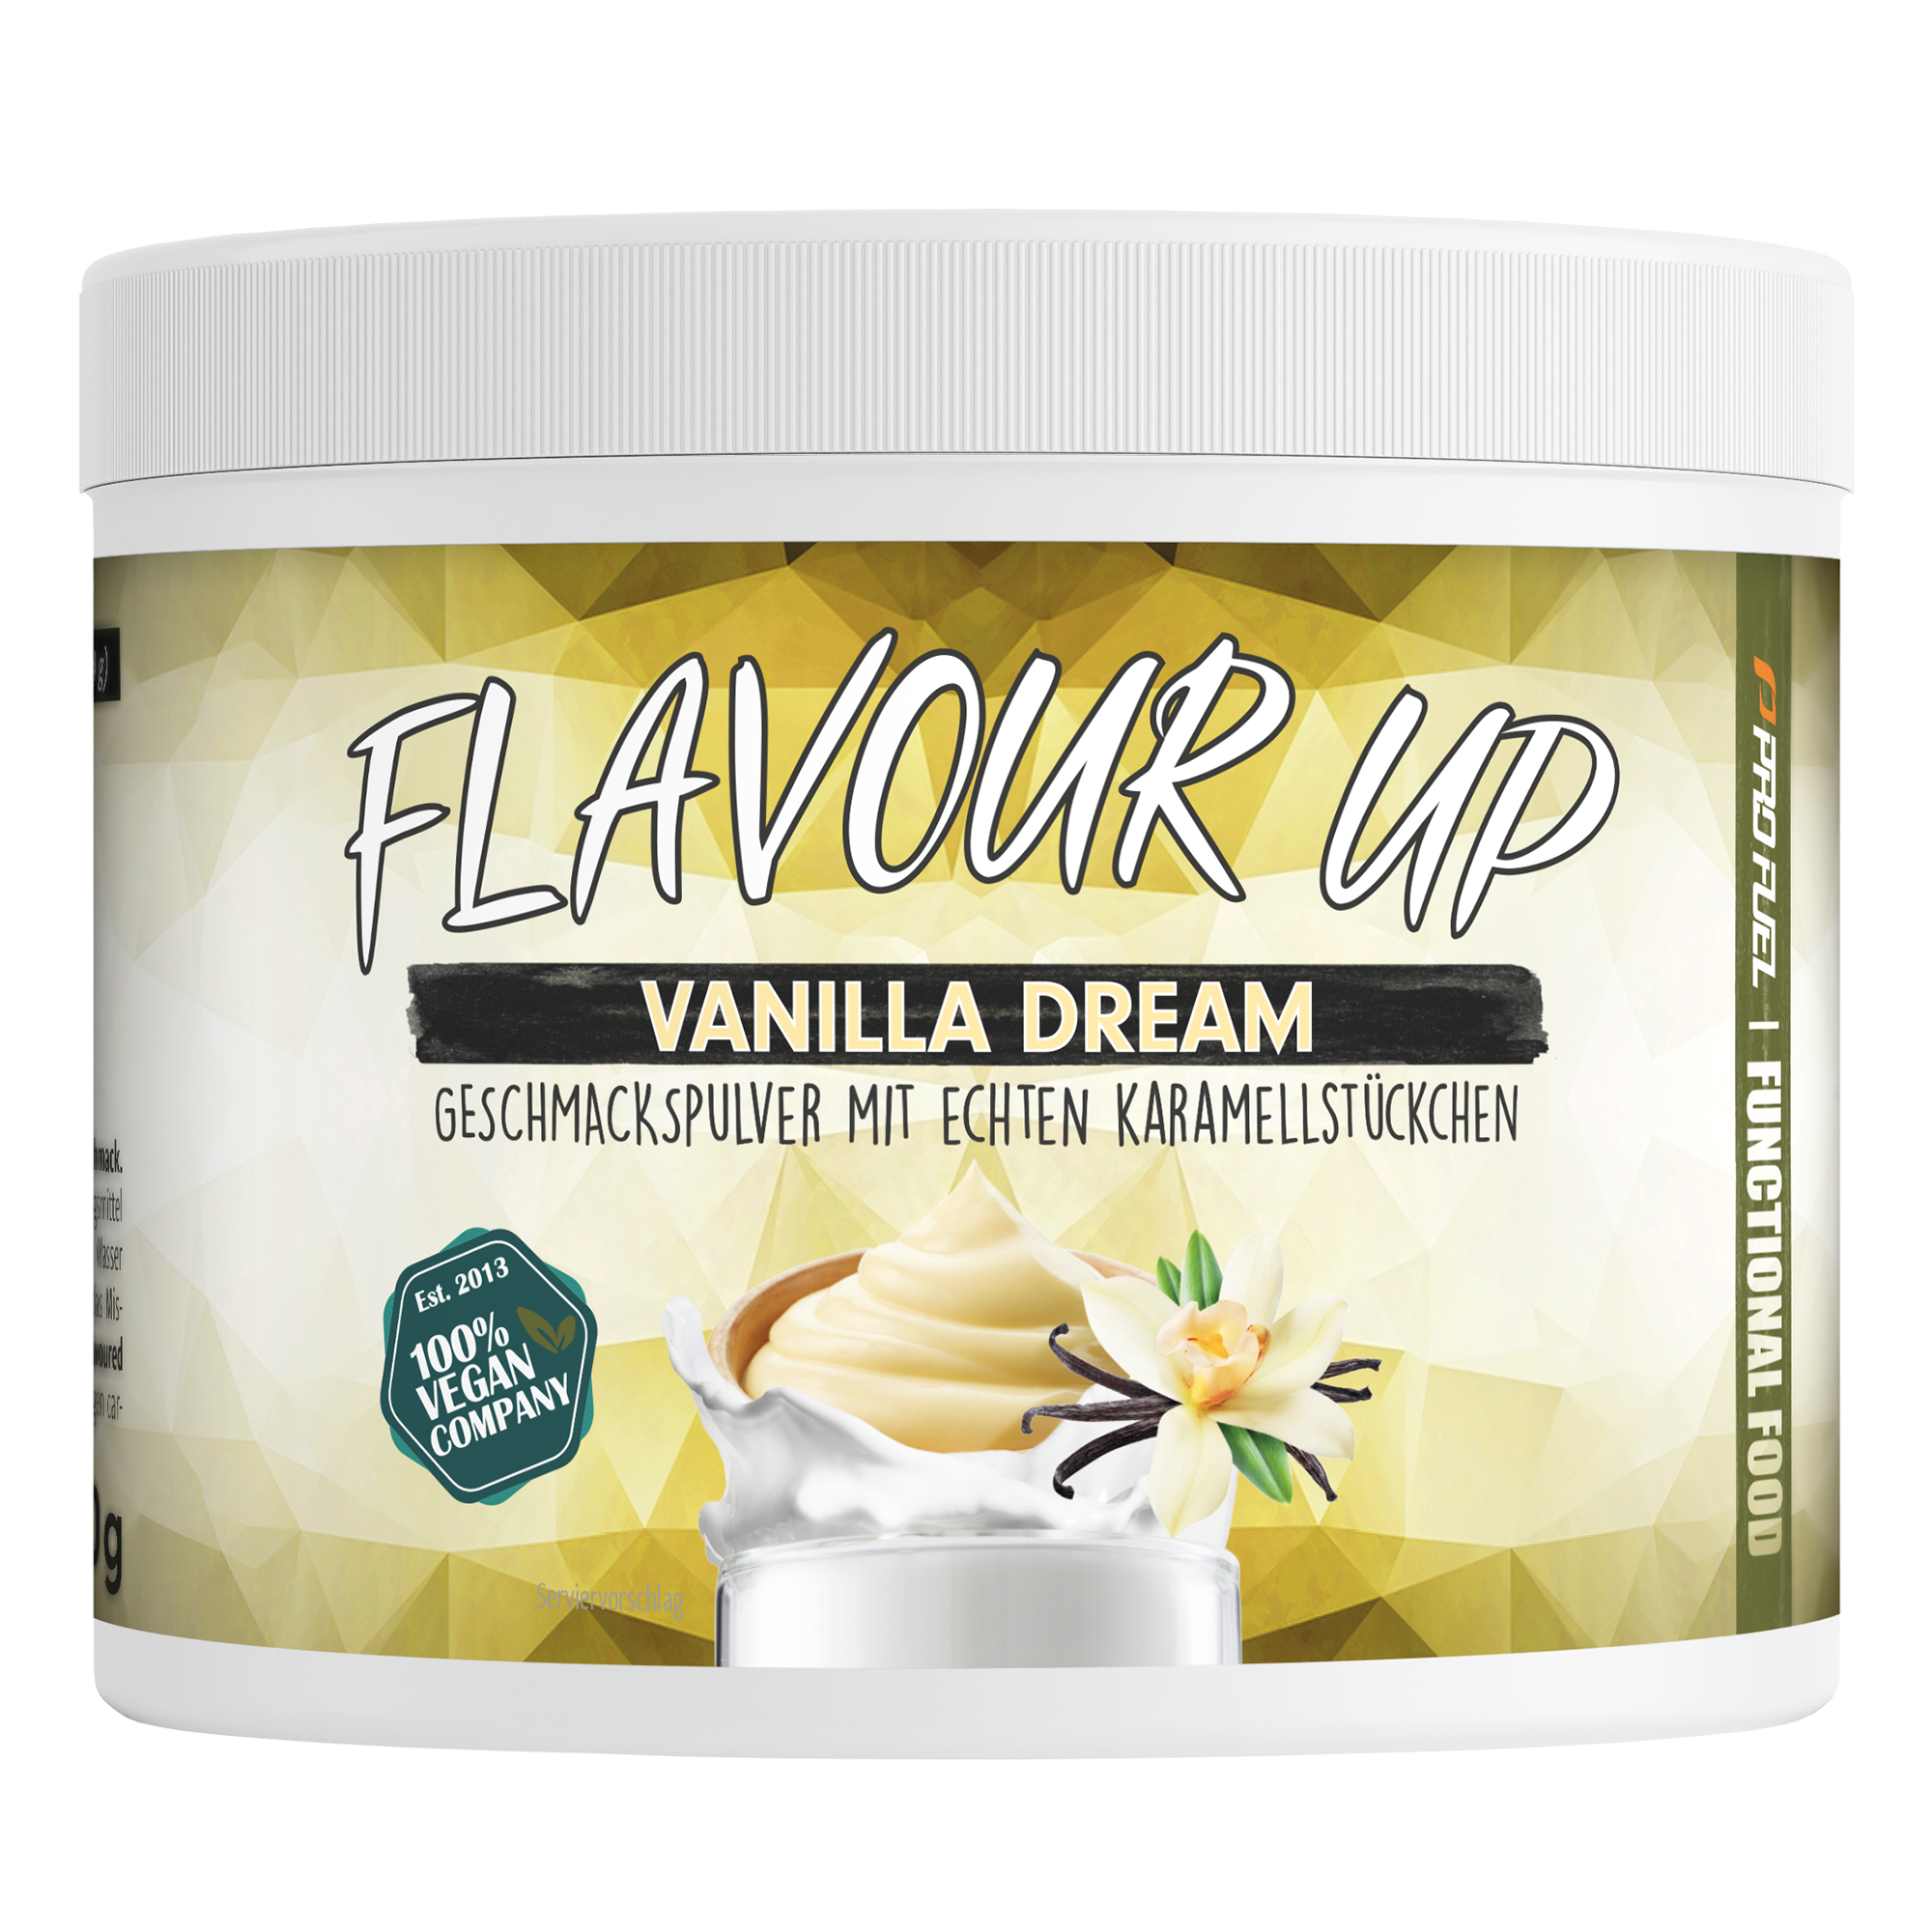 Flavour-Up-Vanilla-Dream-FLVUP-VD2-4251131103085LAmud5Ffu5p1g